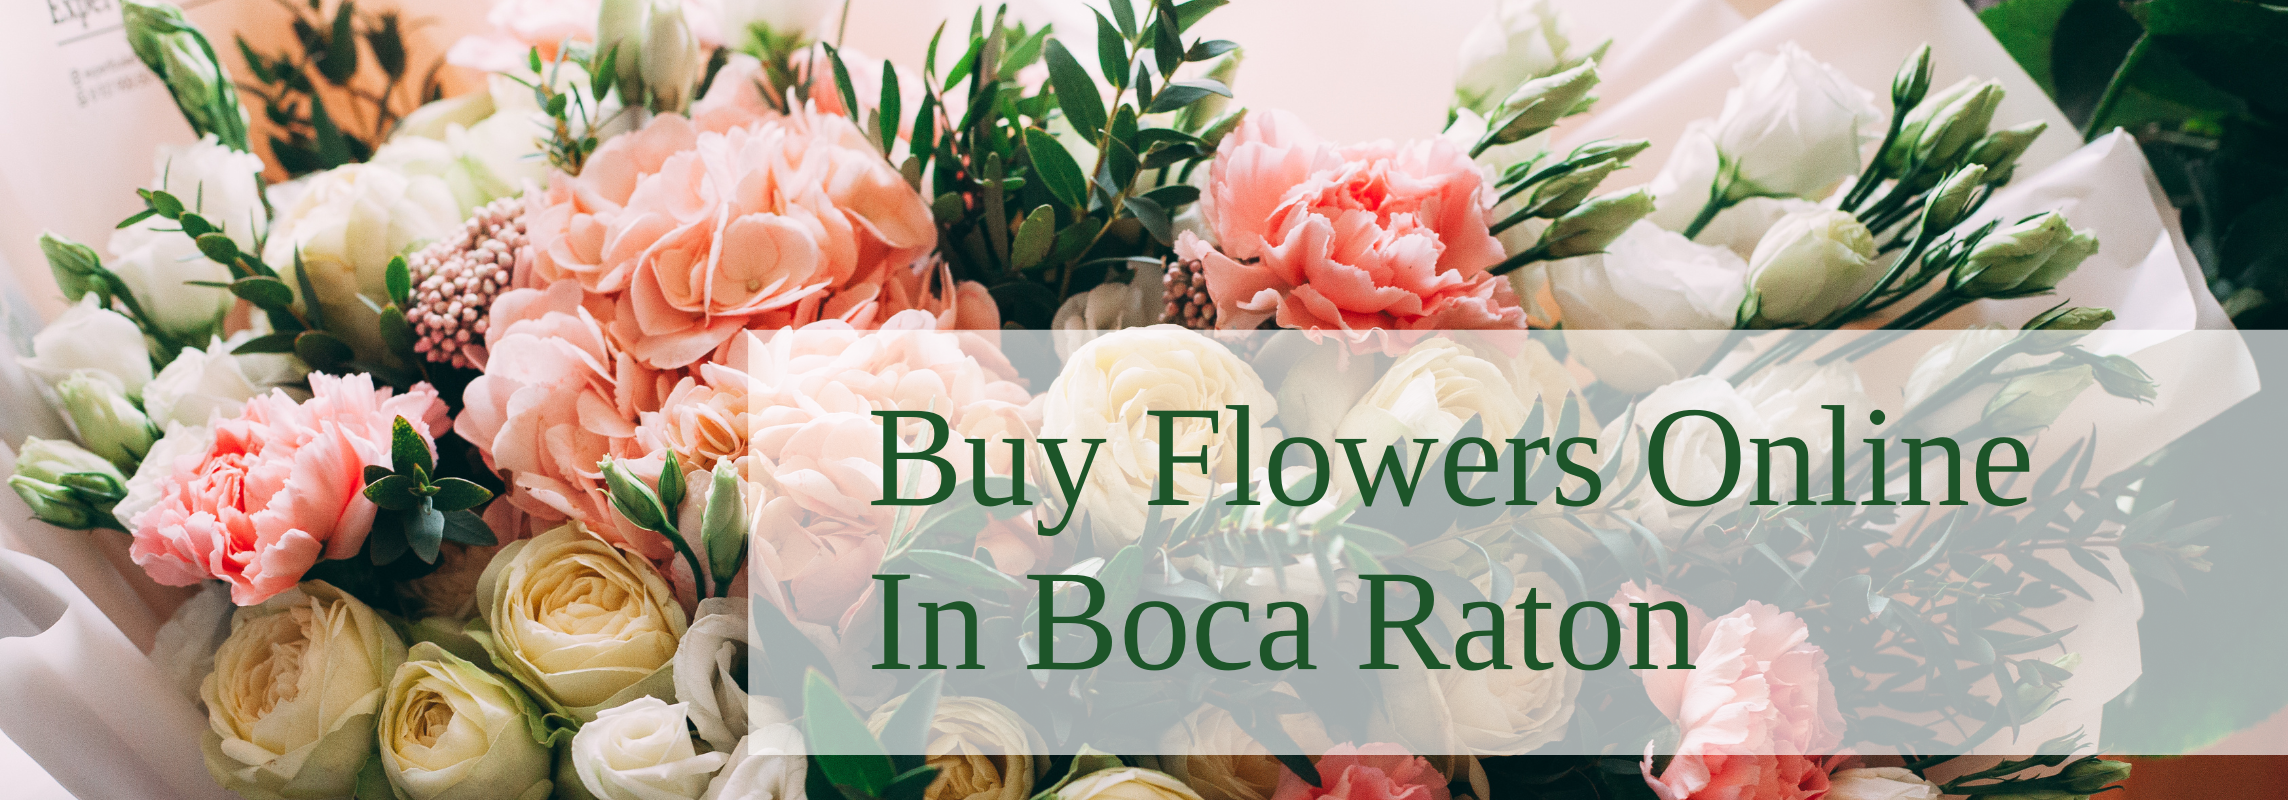 buy flowers online boca raton